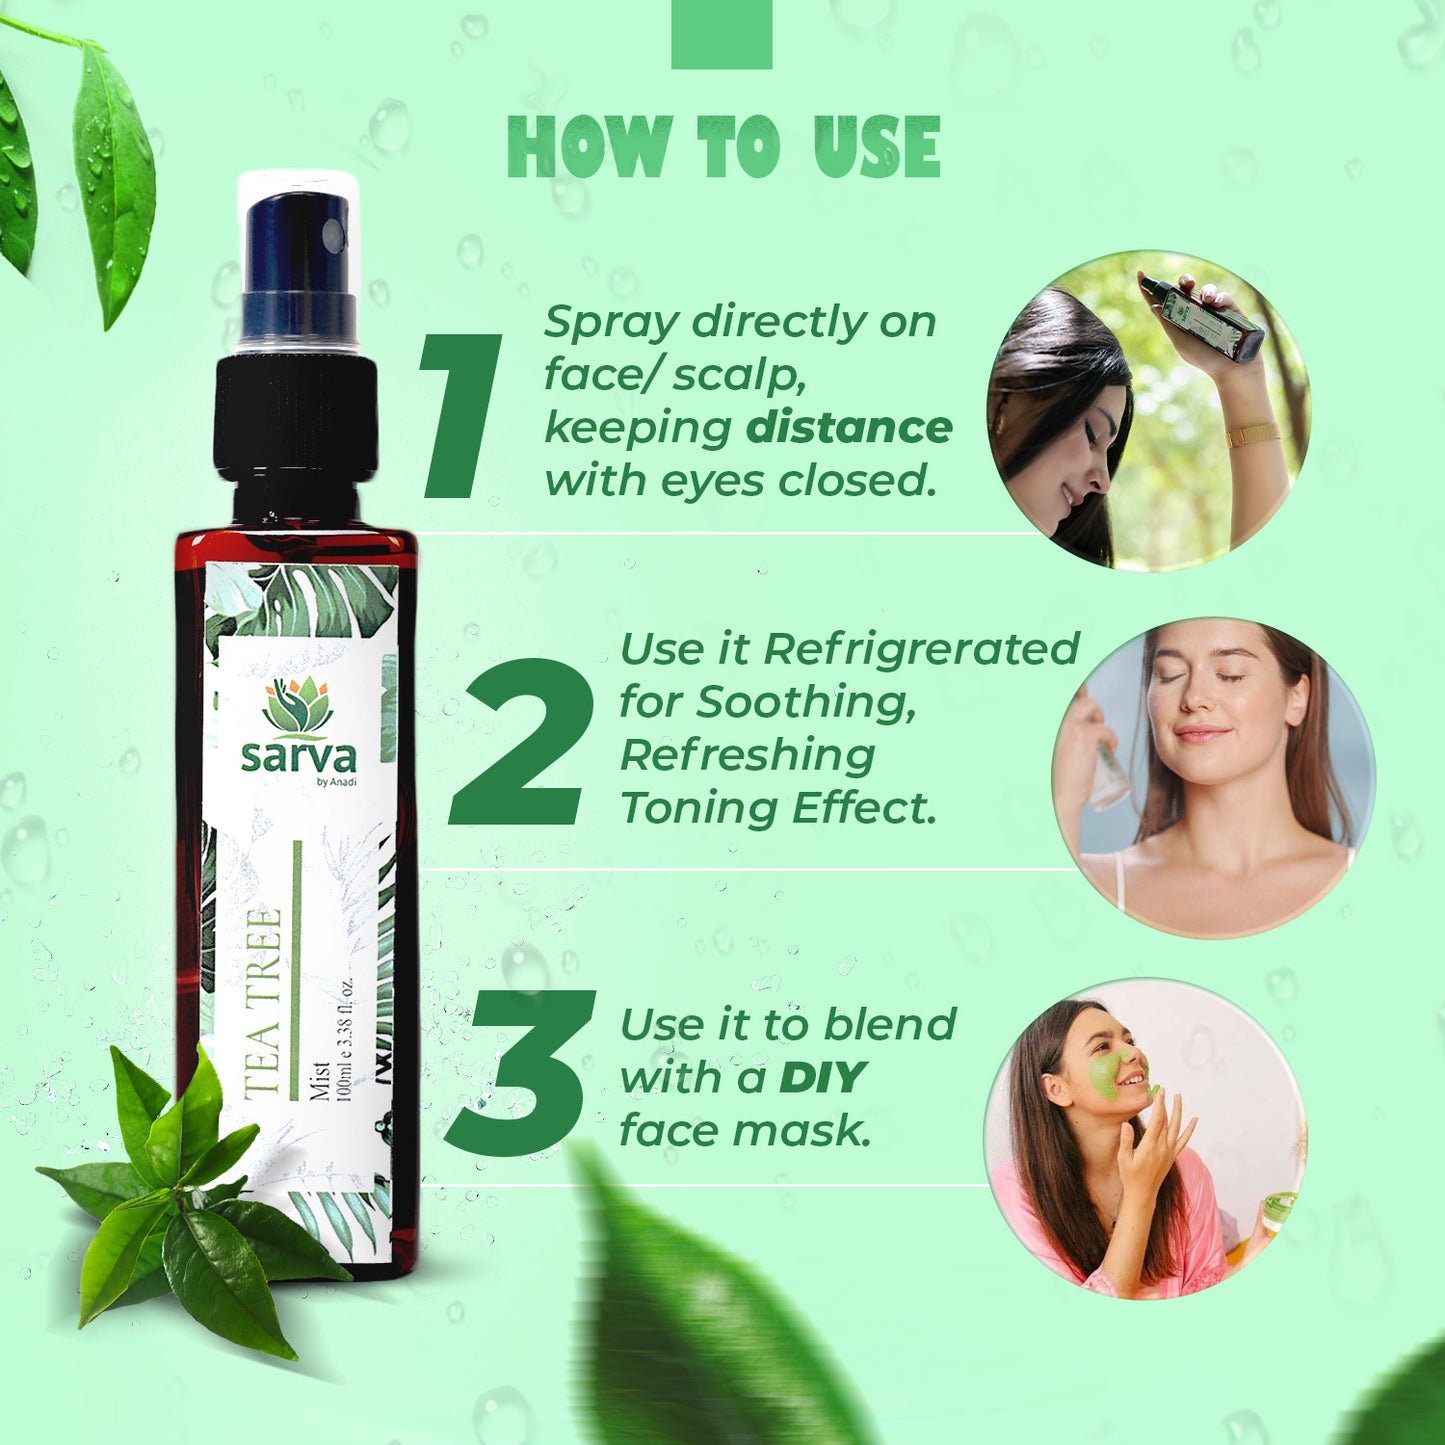 Tea Tree Mist - Oil & Acne Prone Skin | Natural Toner | Dandruff & Itchy Scalp | 100 ml